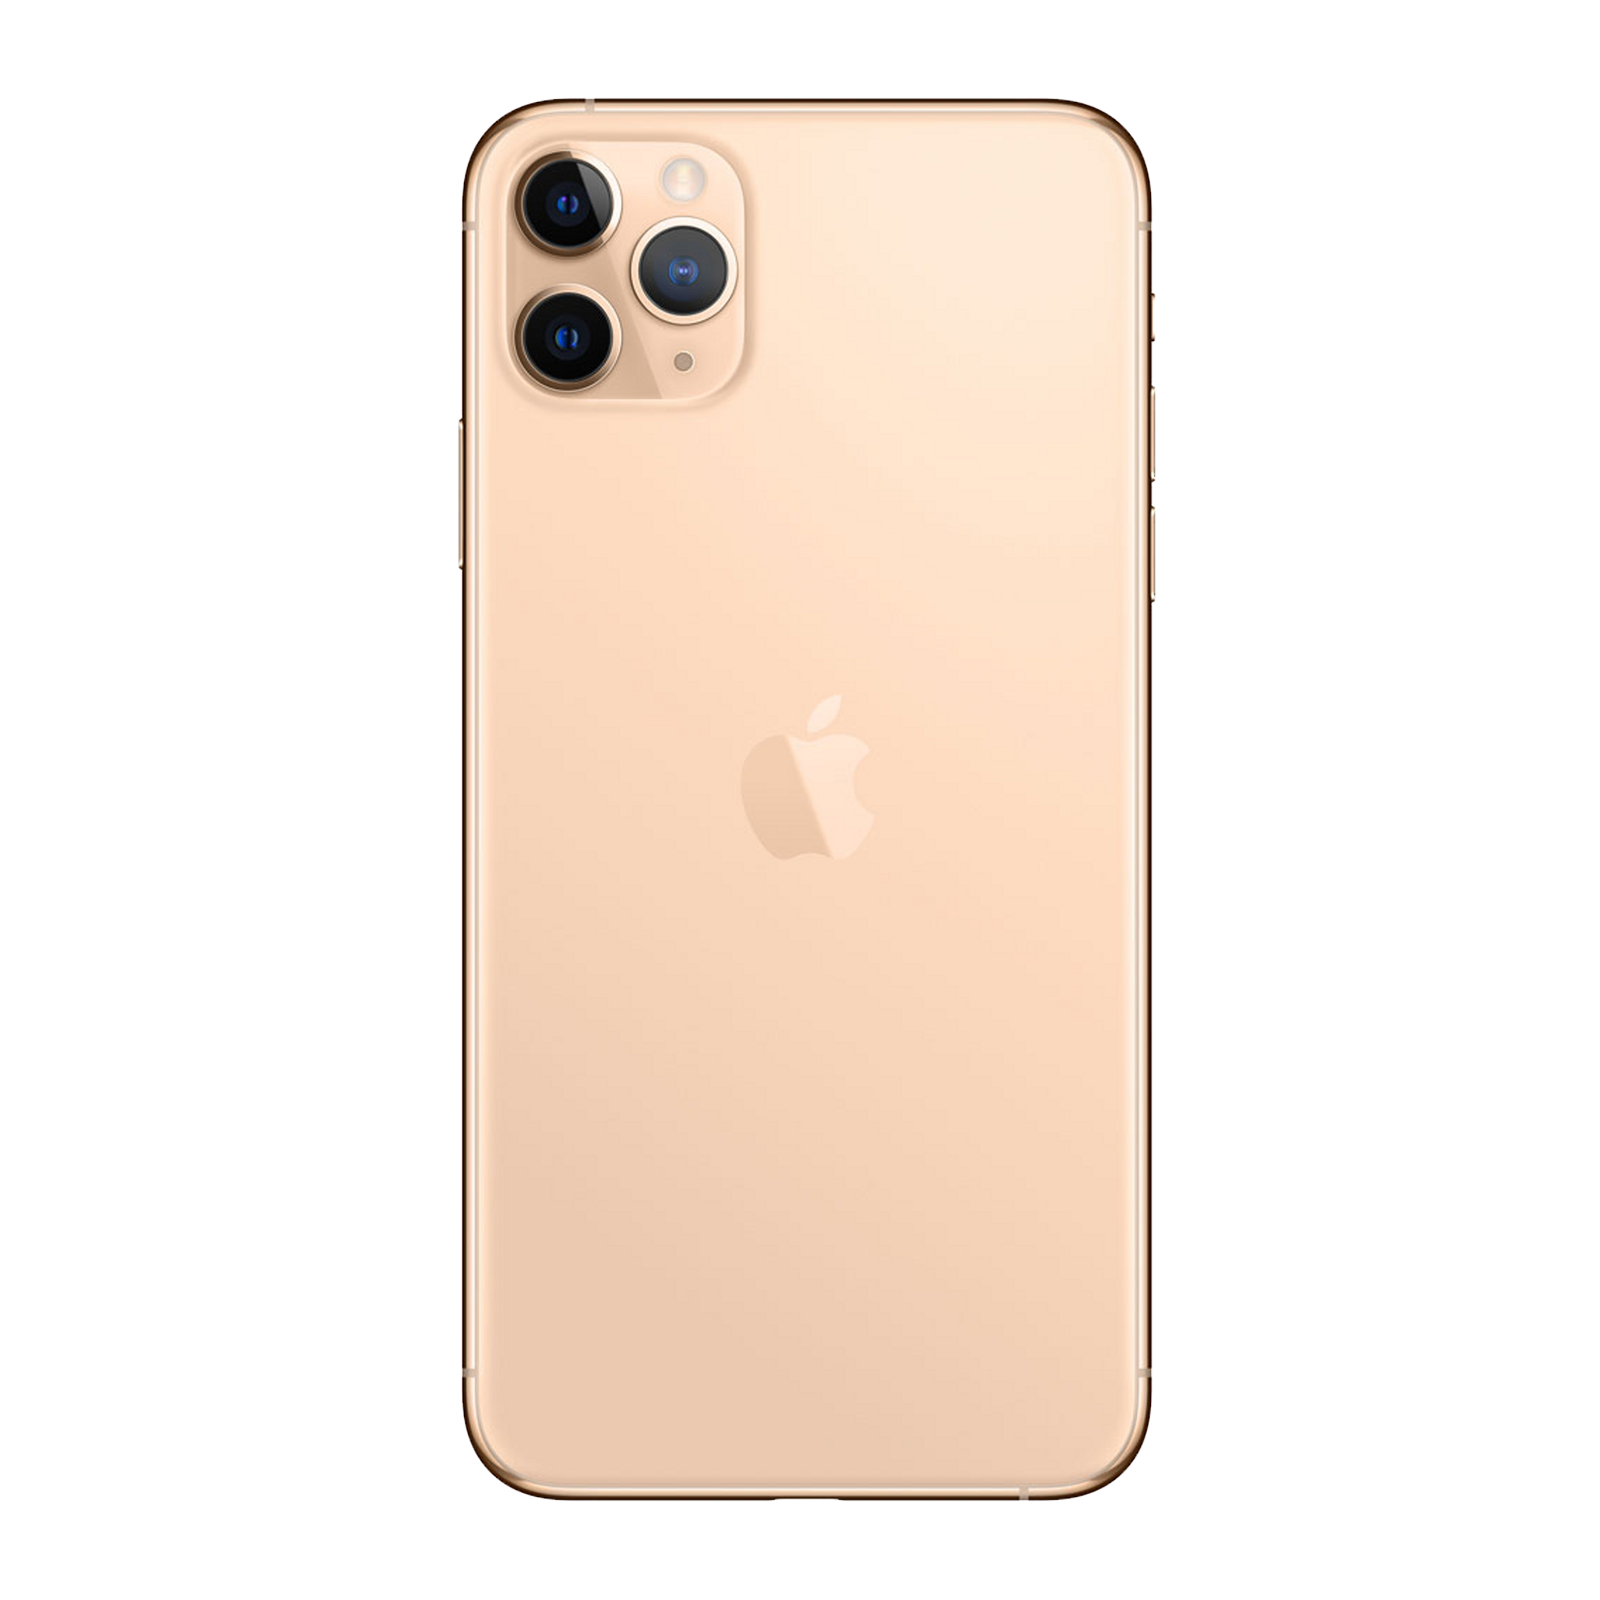 Apple iPhone 11 Pro 512GB Gold Good - Verizon